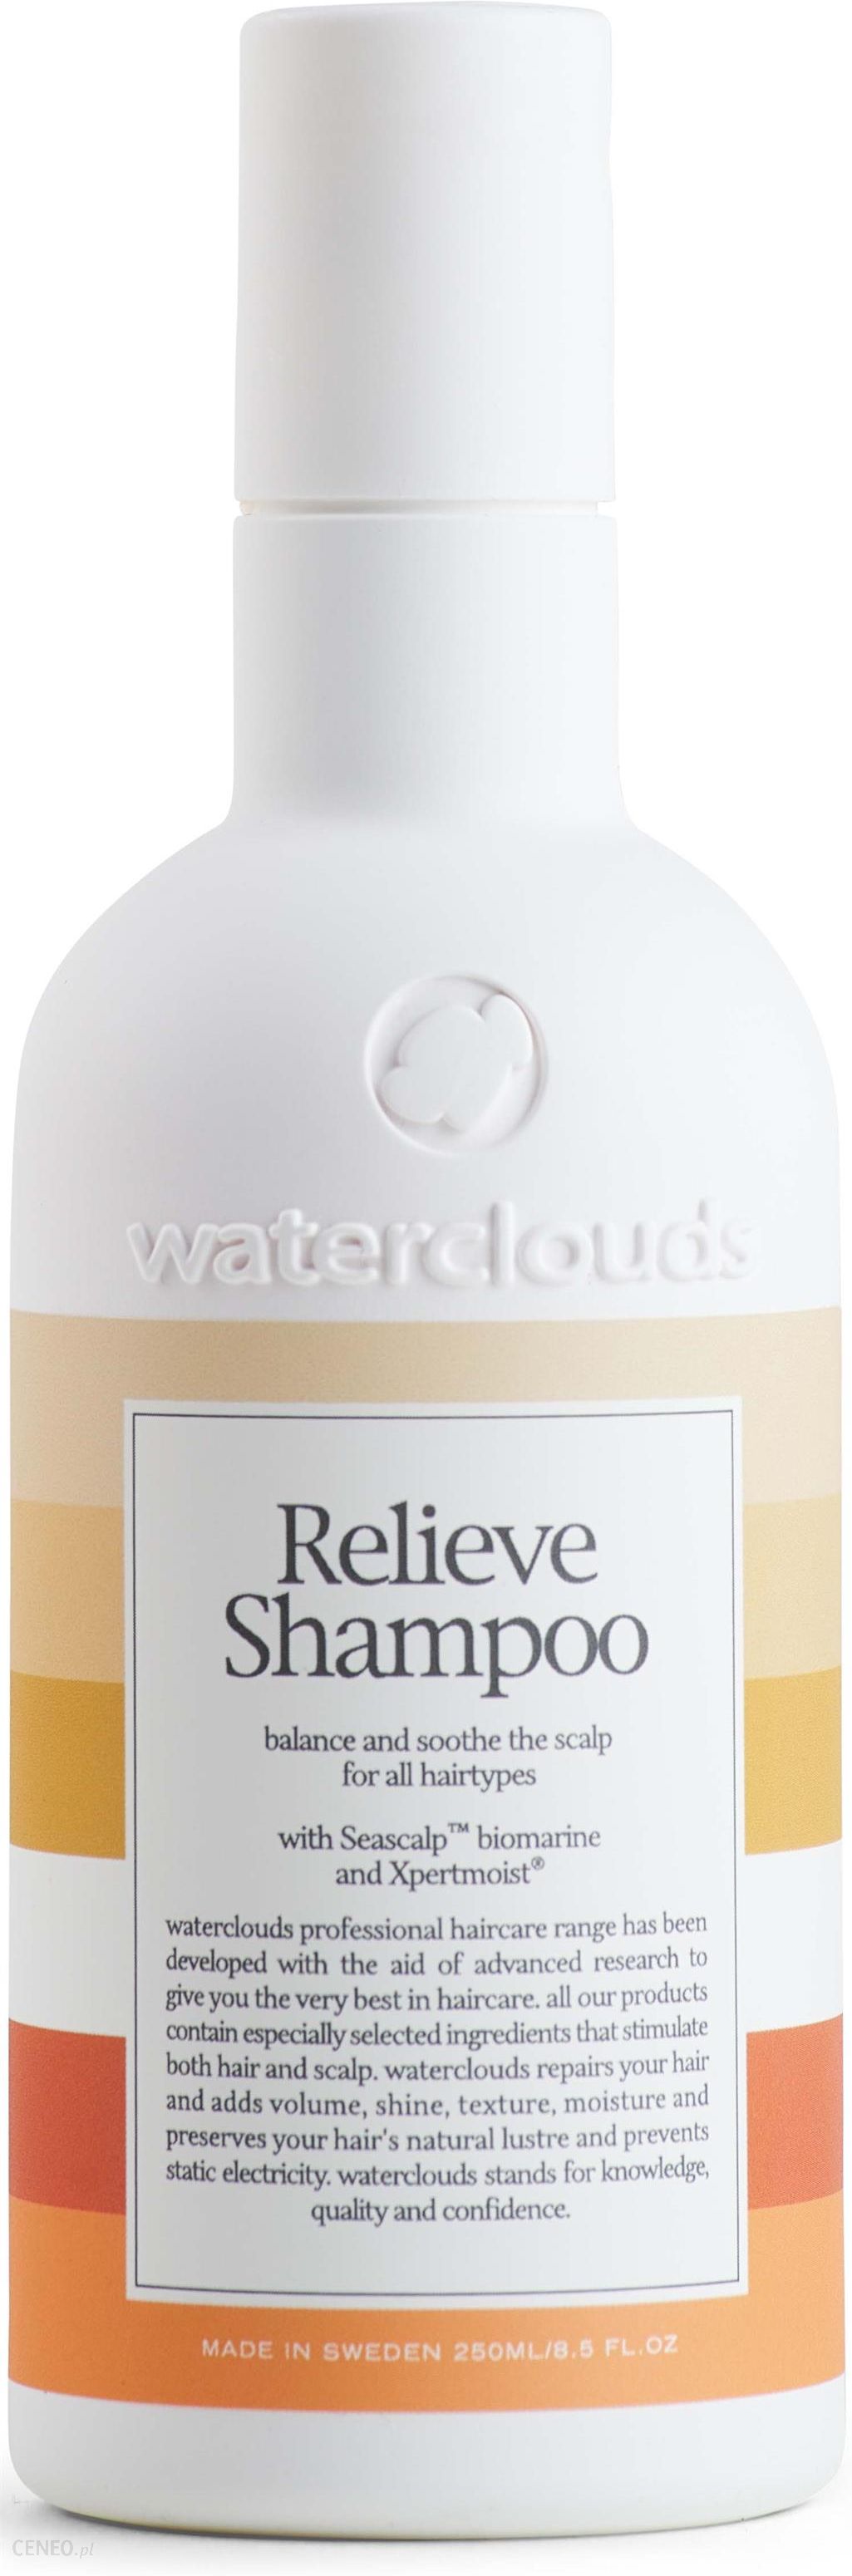 waterclouds szampon opinie